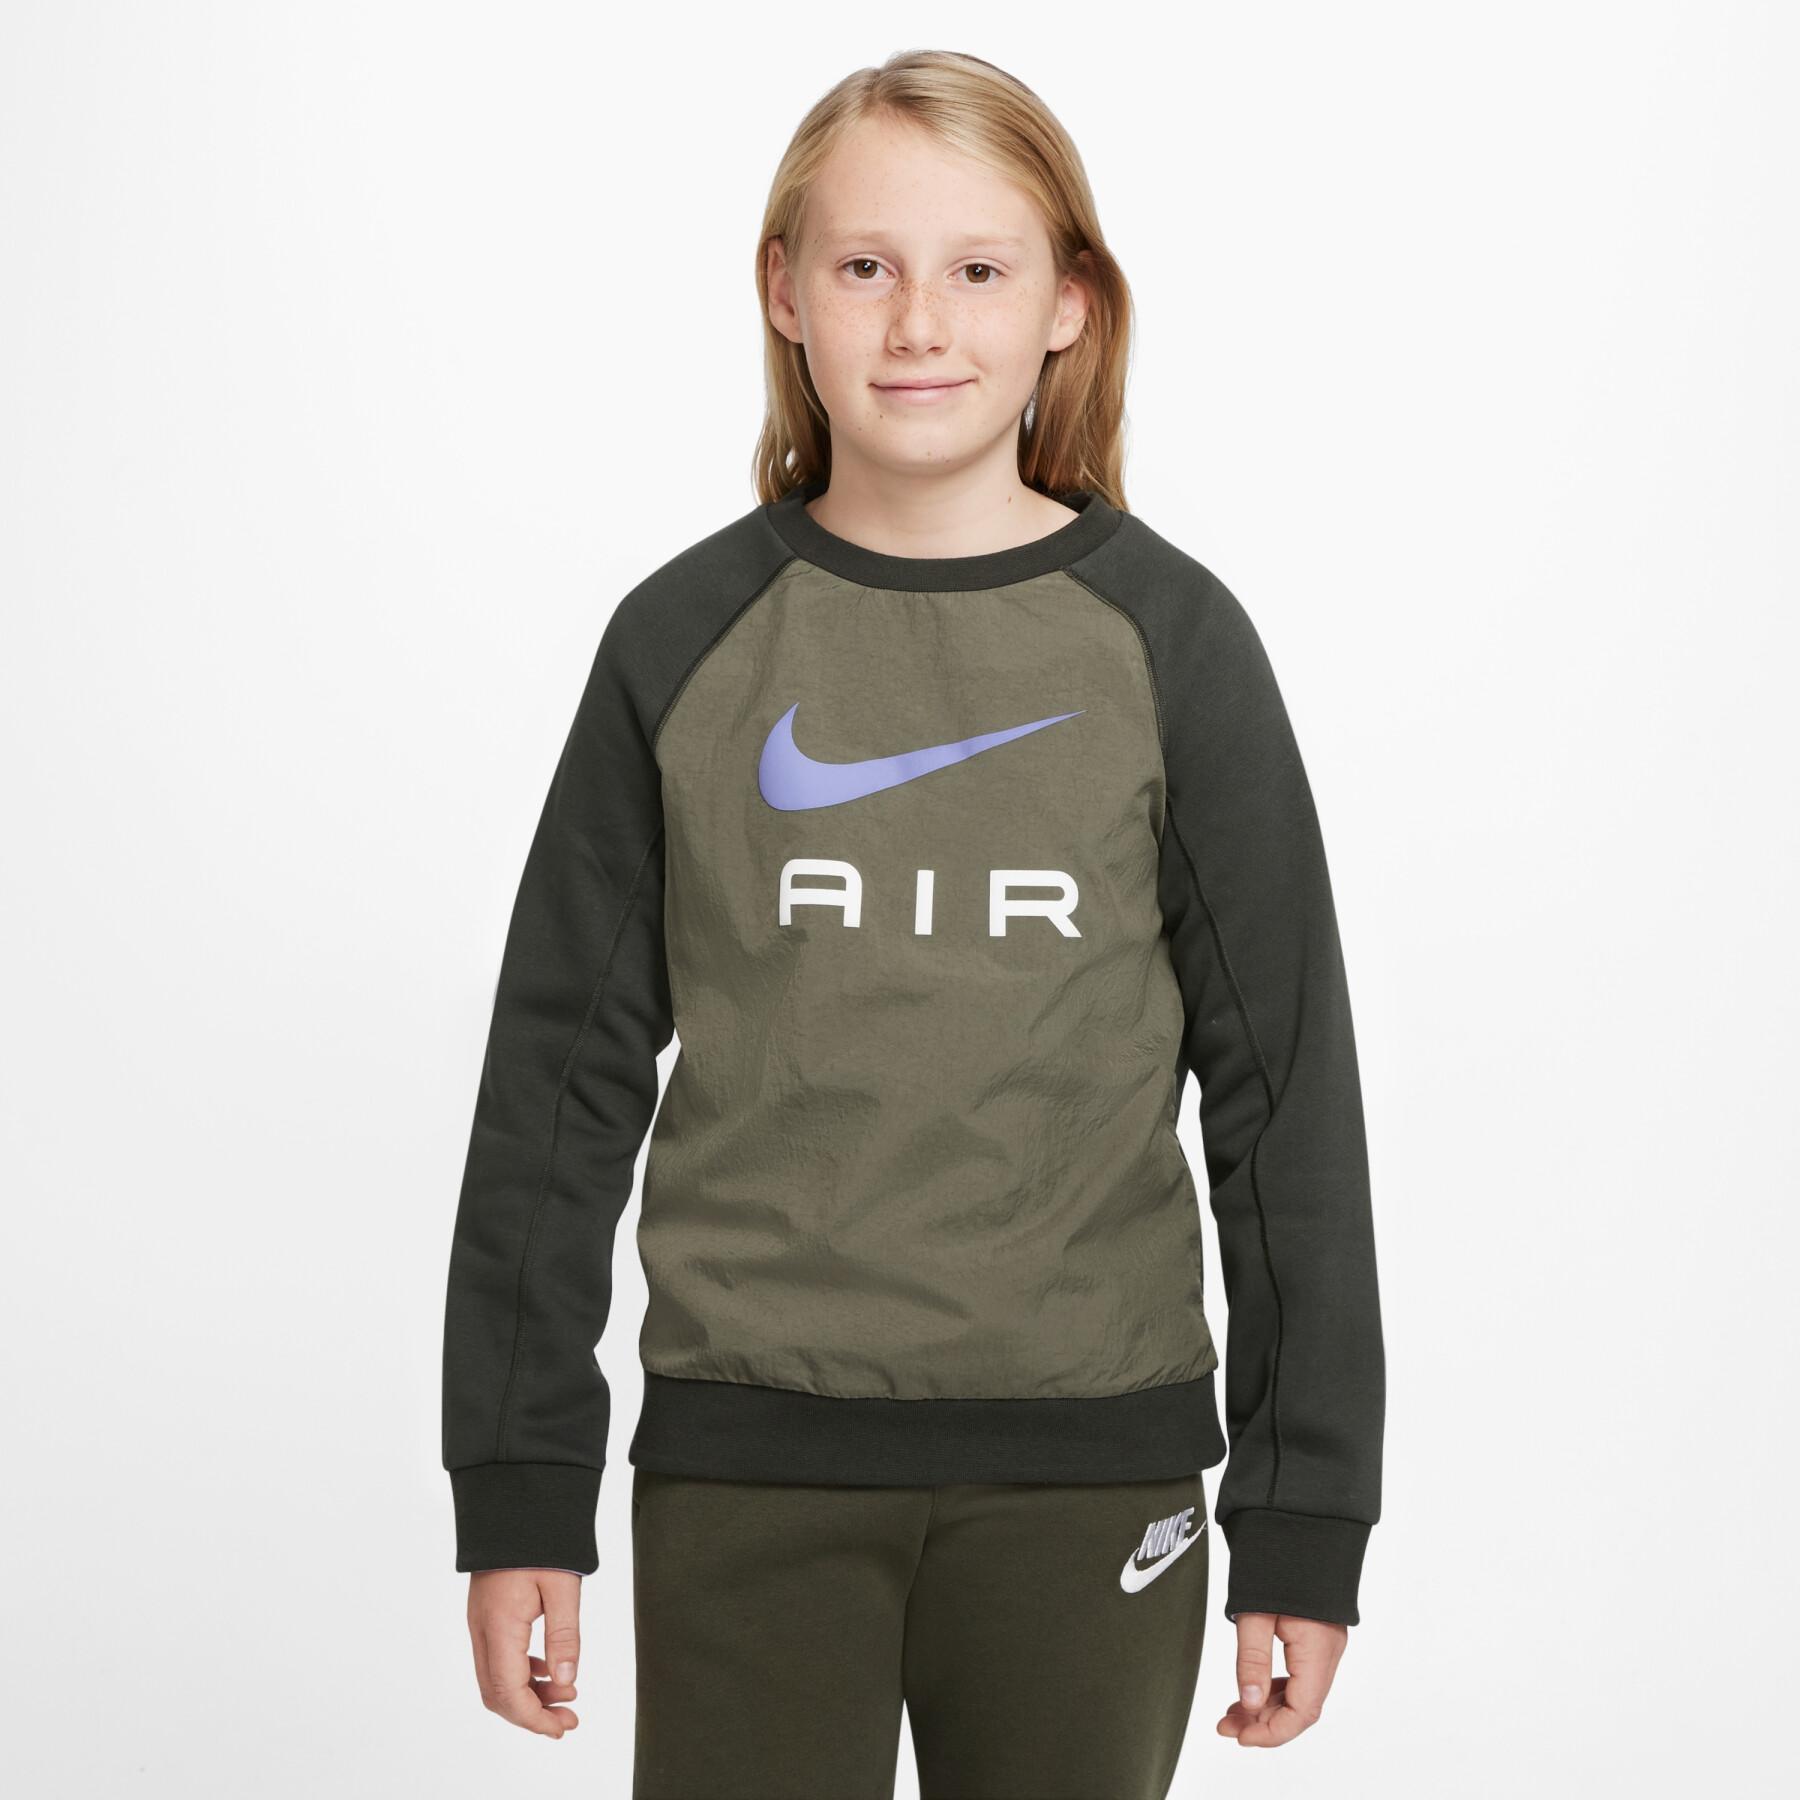 Nike Air Junior Sweatshirt - Khaki/White/Purple